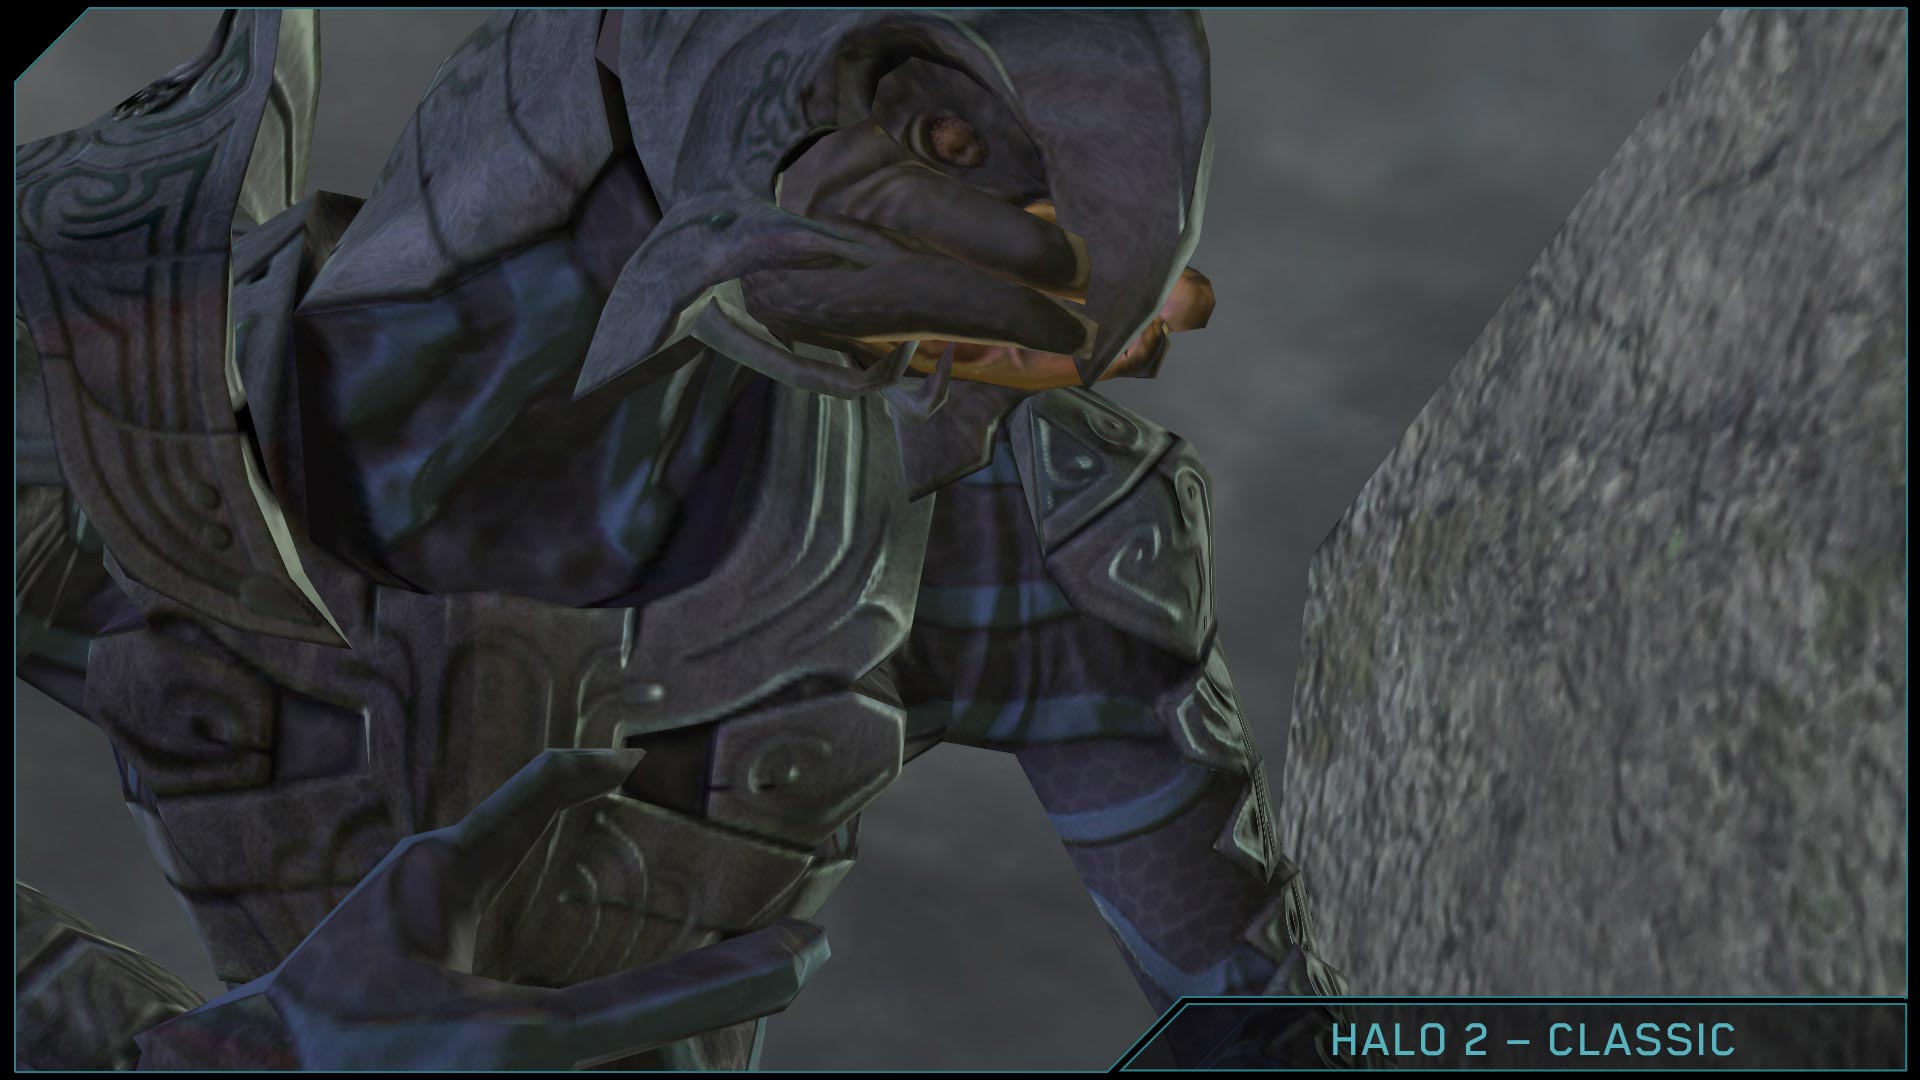 halo 2 classic screenshot 2 تصاویر چشم نواز جدیدی با کیفیت 1080p از Halo: The Master Chief Collection منتشر شد